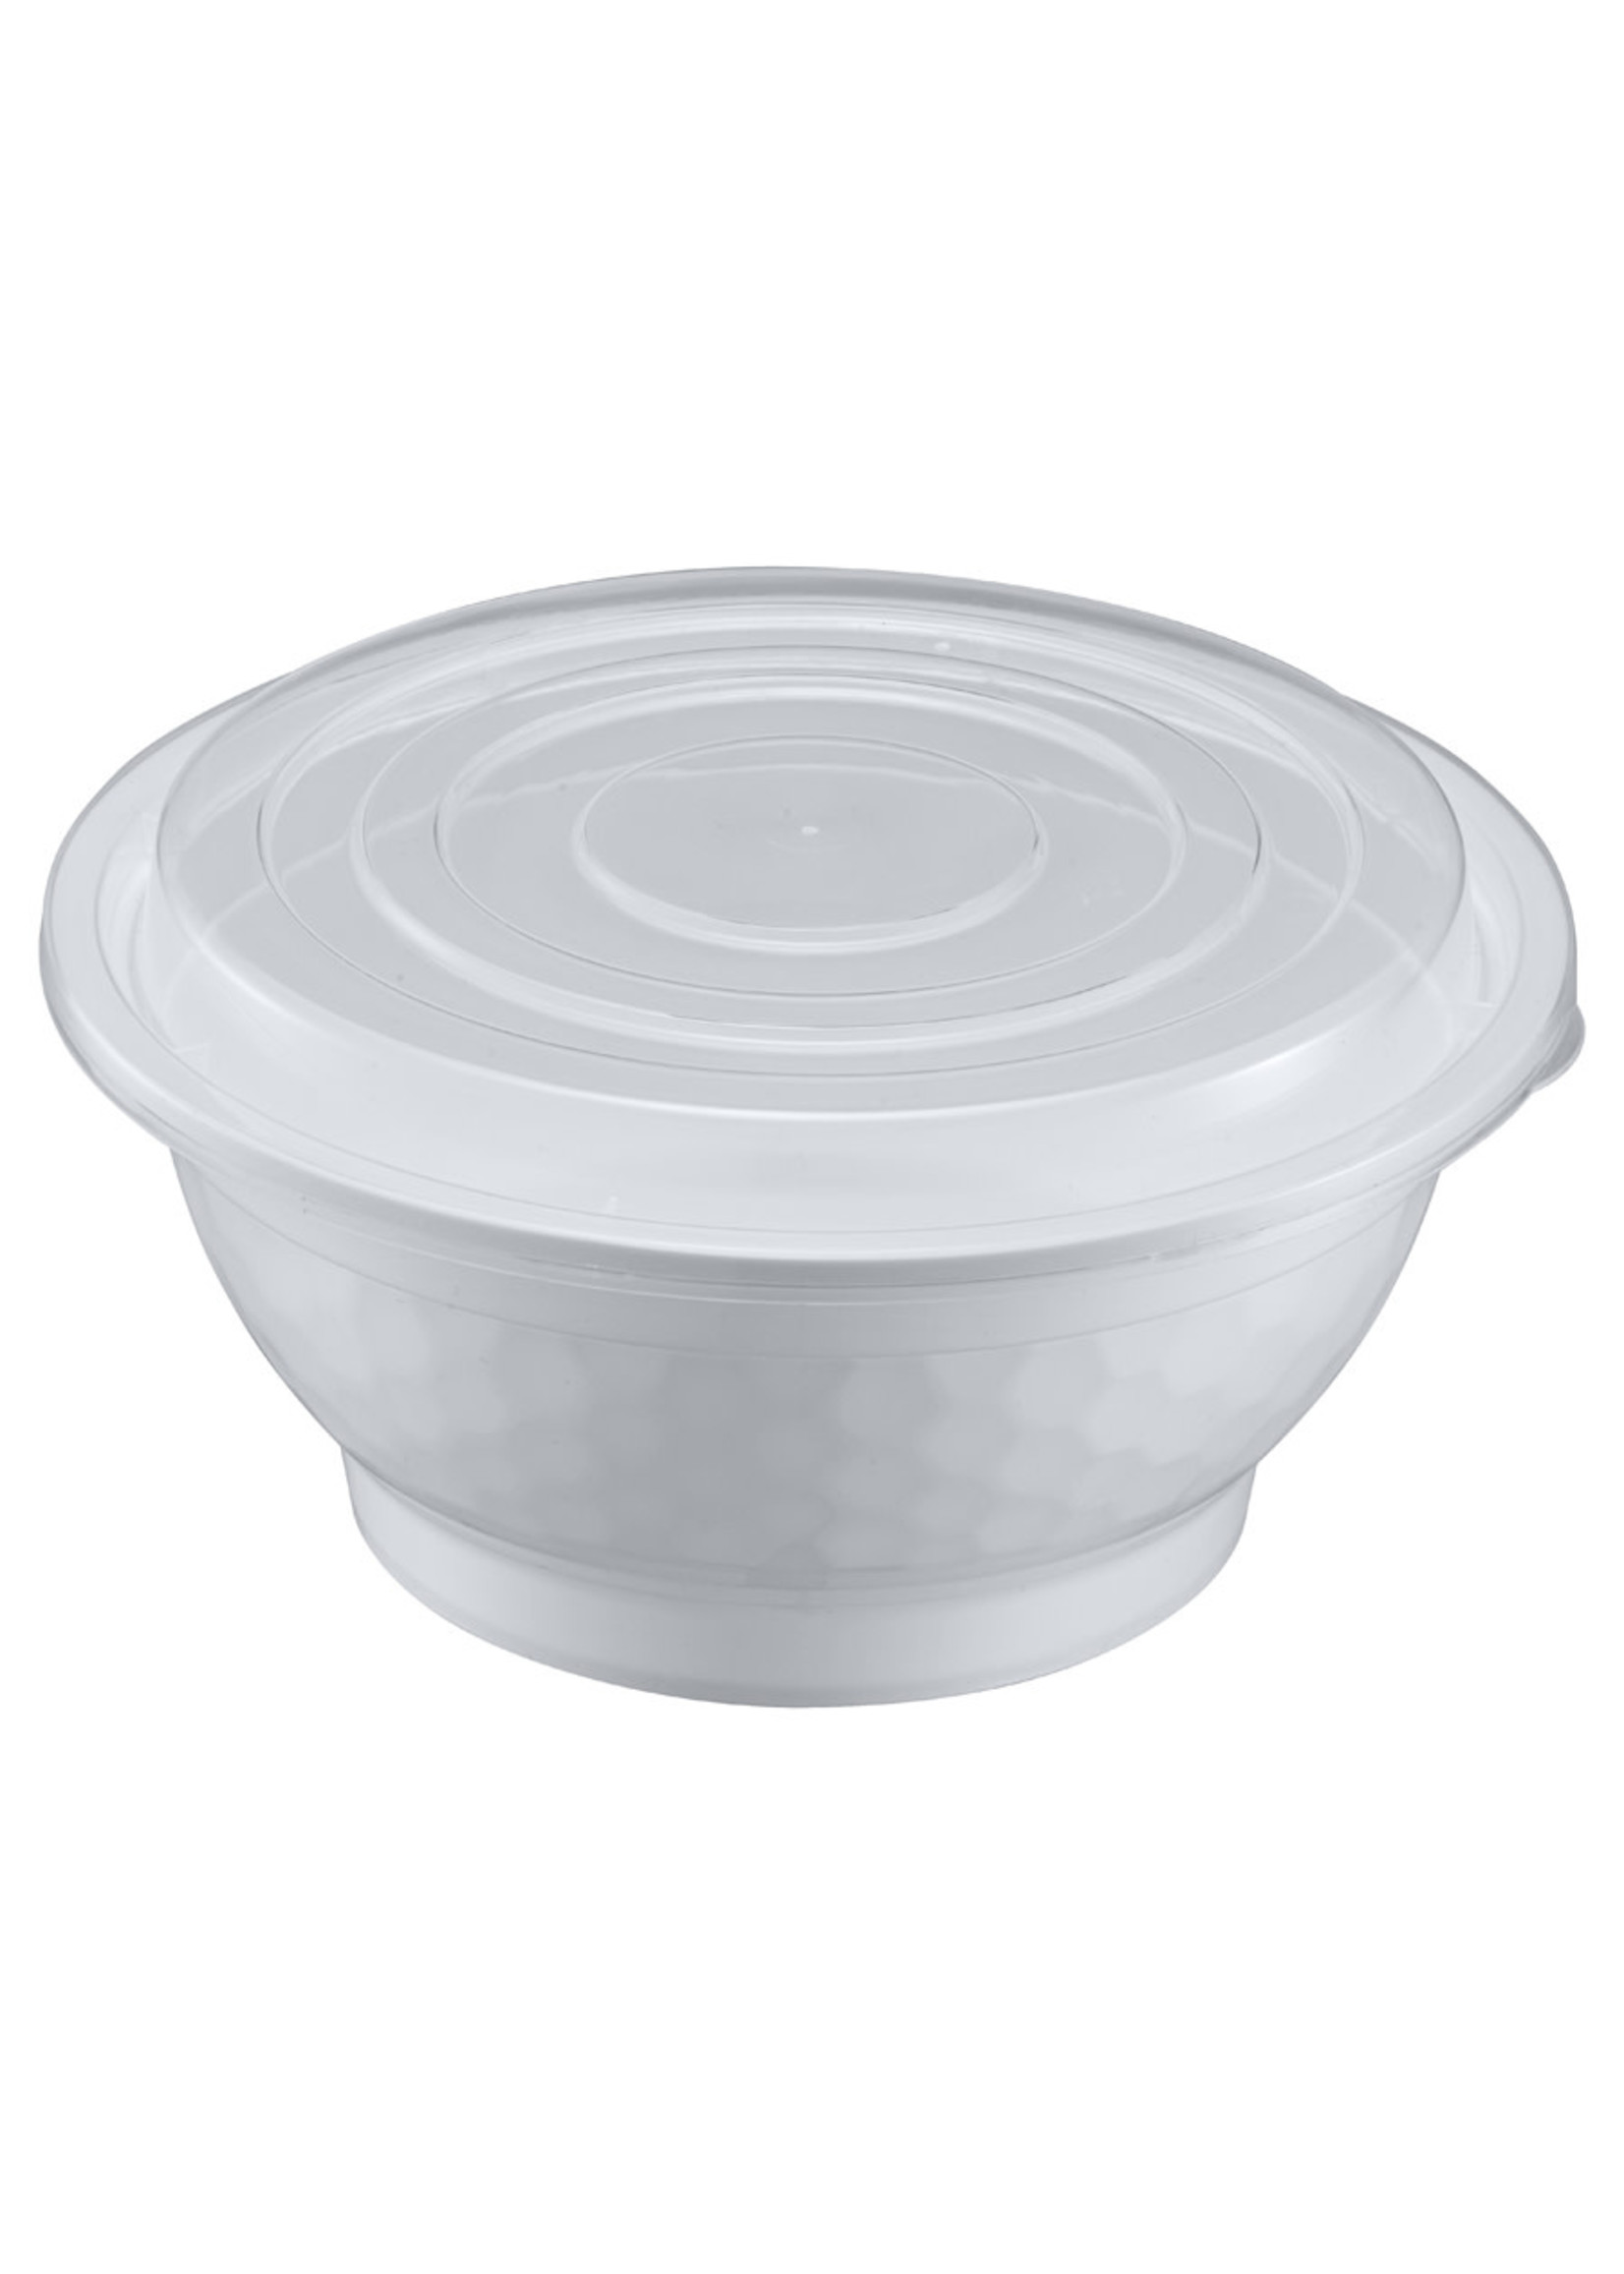 Tiya, Inc. NB-36W - 36oz Microwavable Noodle Bowl with Lid, White, 120 Sets (40/6)